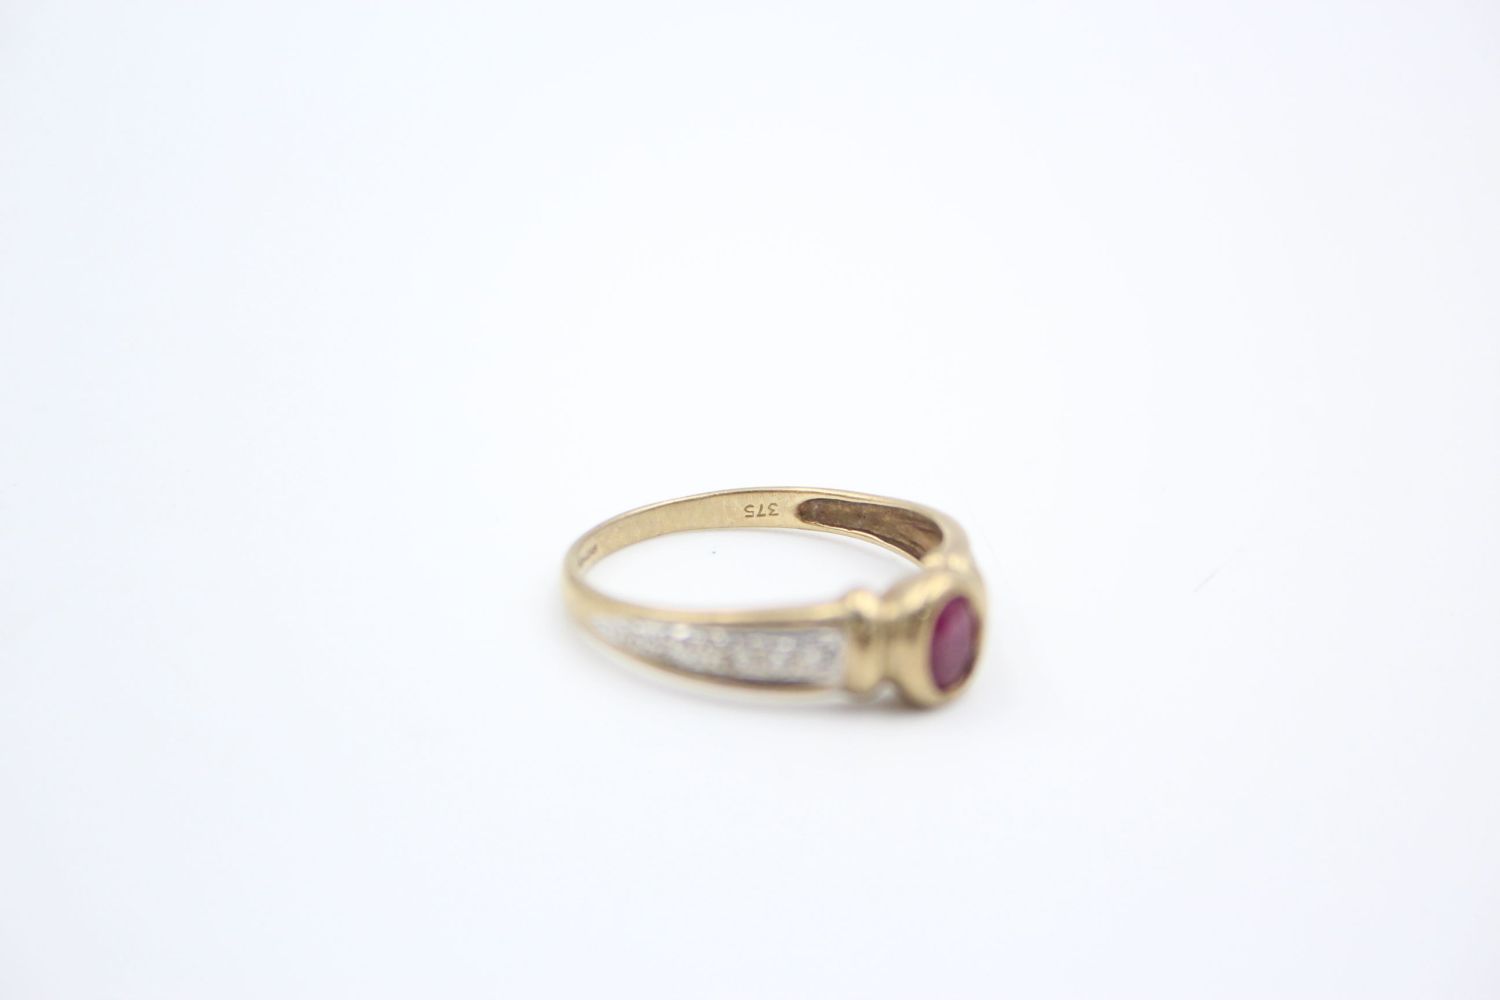 9ct Gold ruby & diamond detail dress ring 2 grams gross - Image 5 of 6